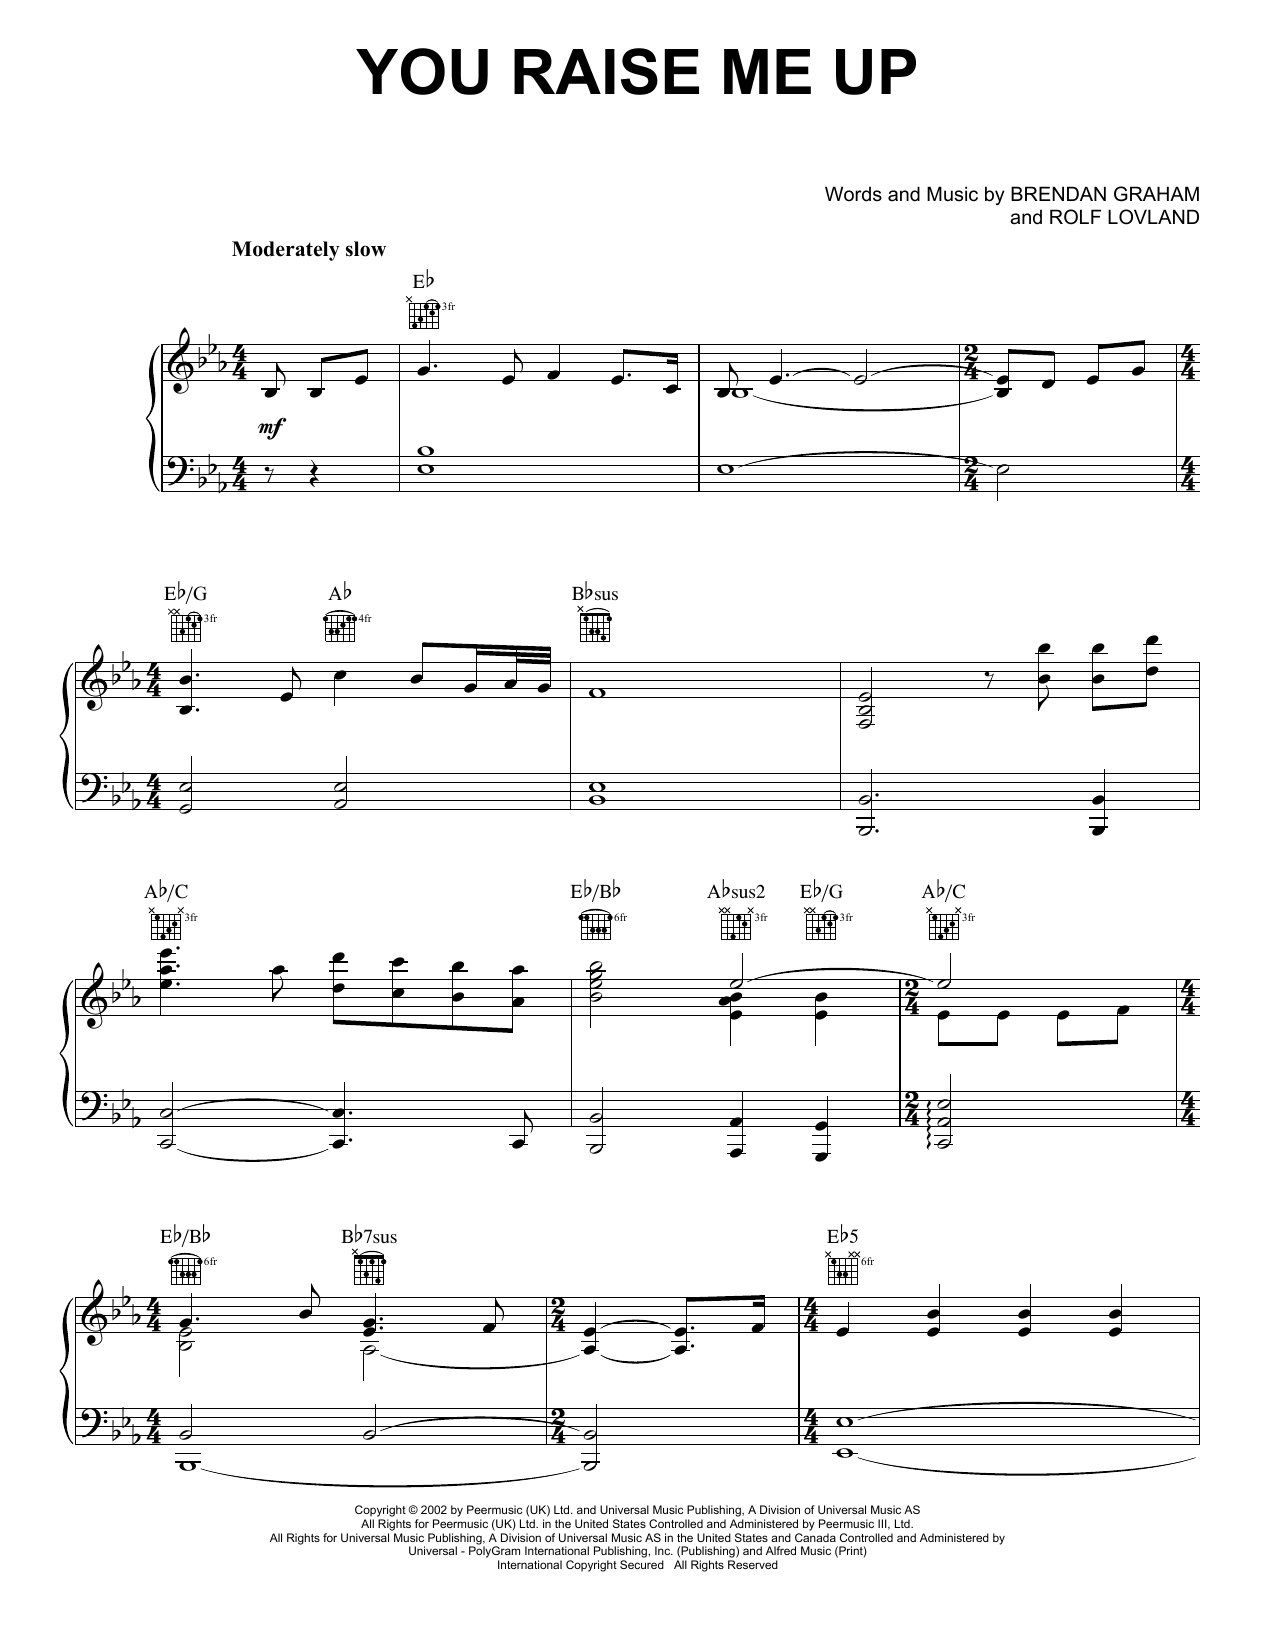 Josh Groban You Raise Me Up Sheet Music Notes & Chords for Ukulele with strumming patterns - Download or Print PDF